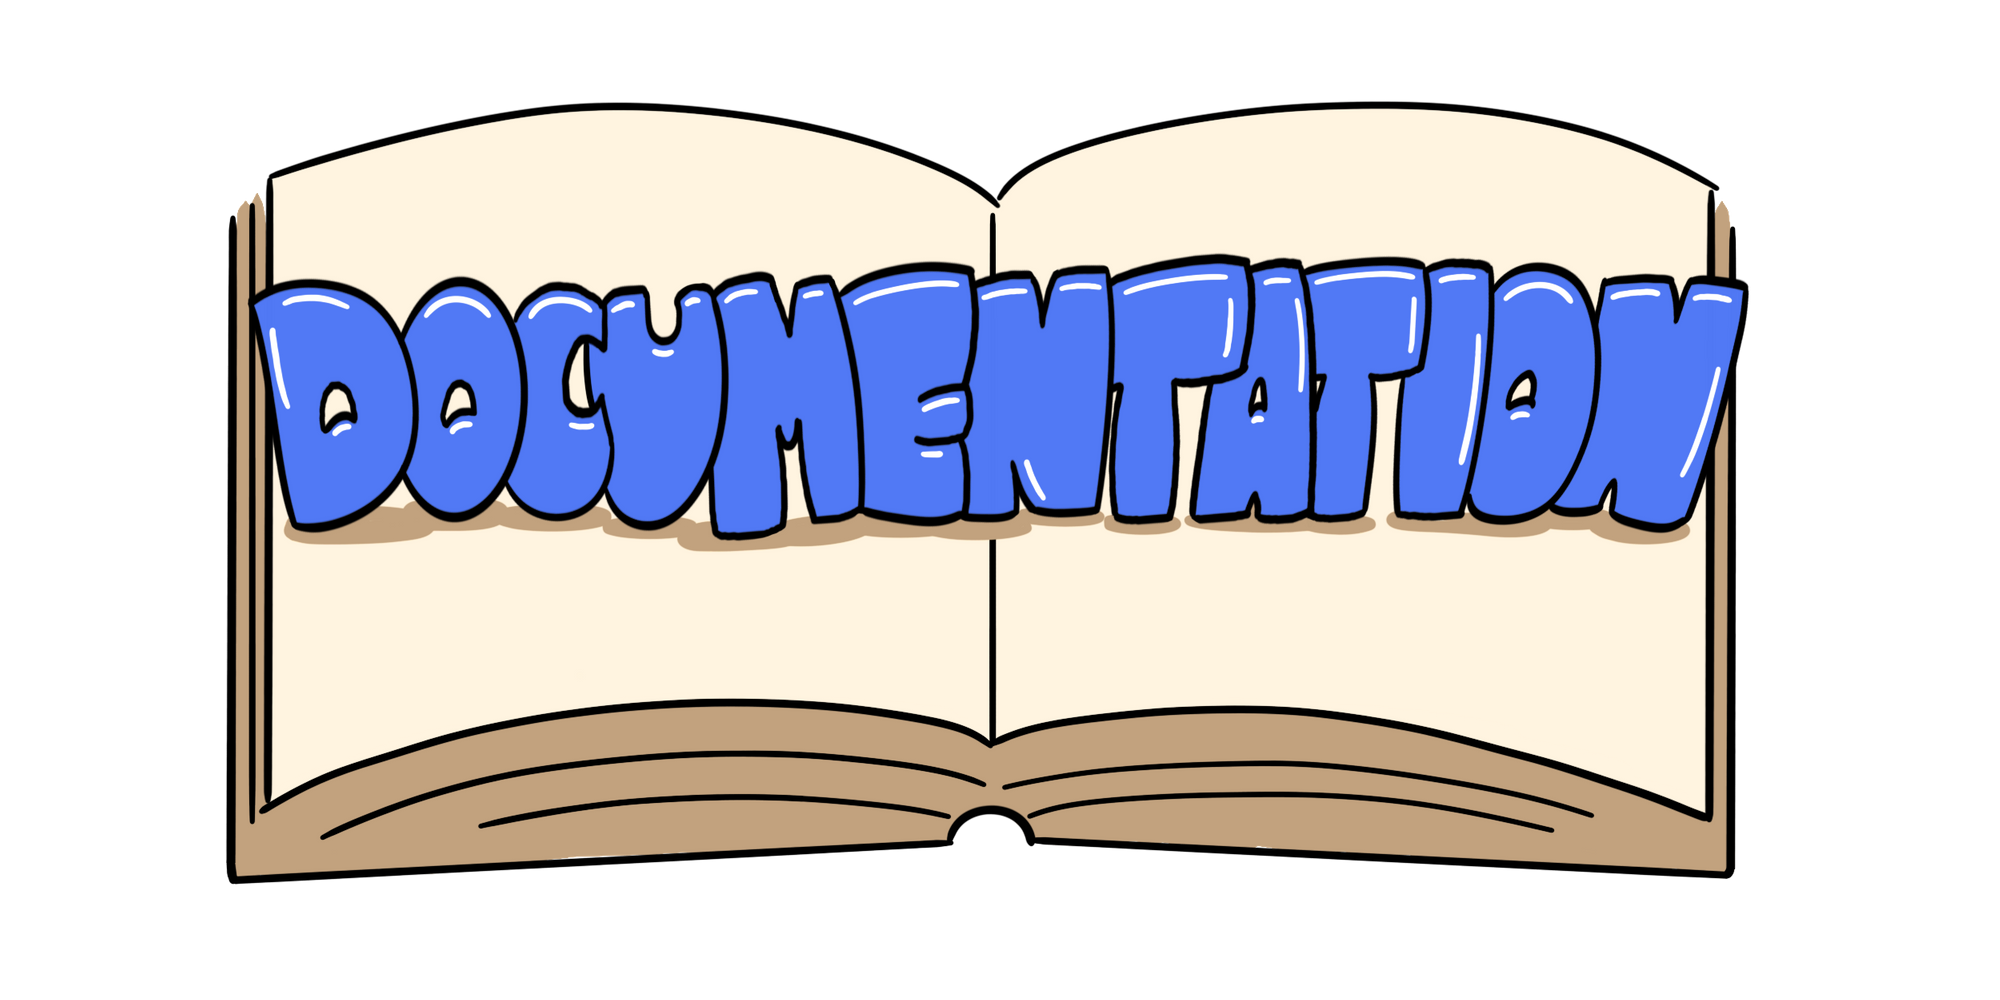 How to Write Good Documentation